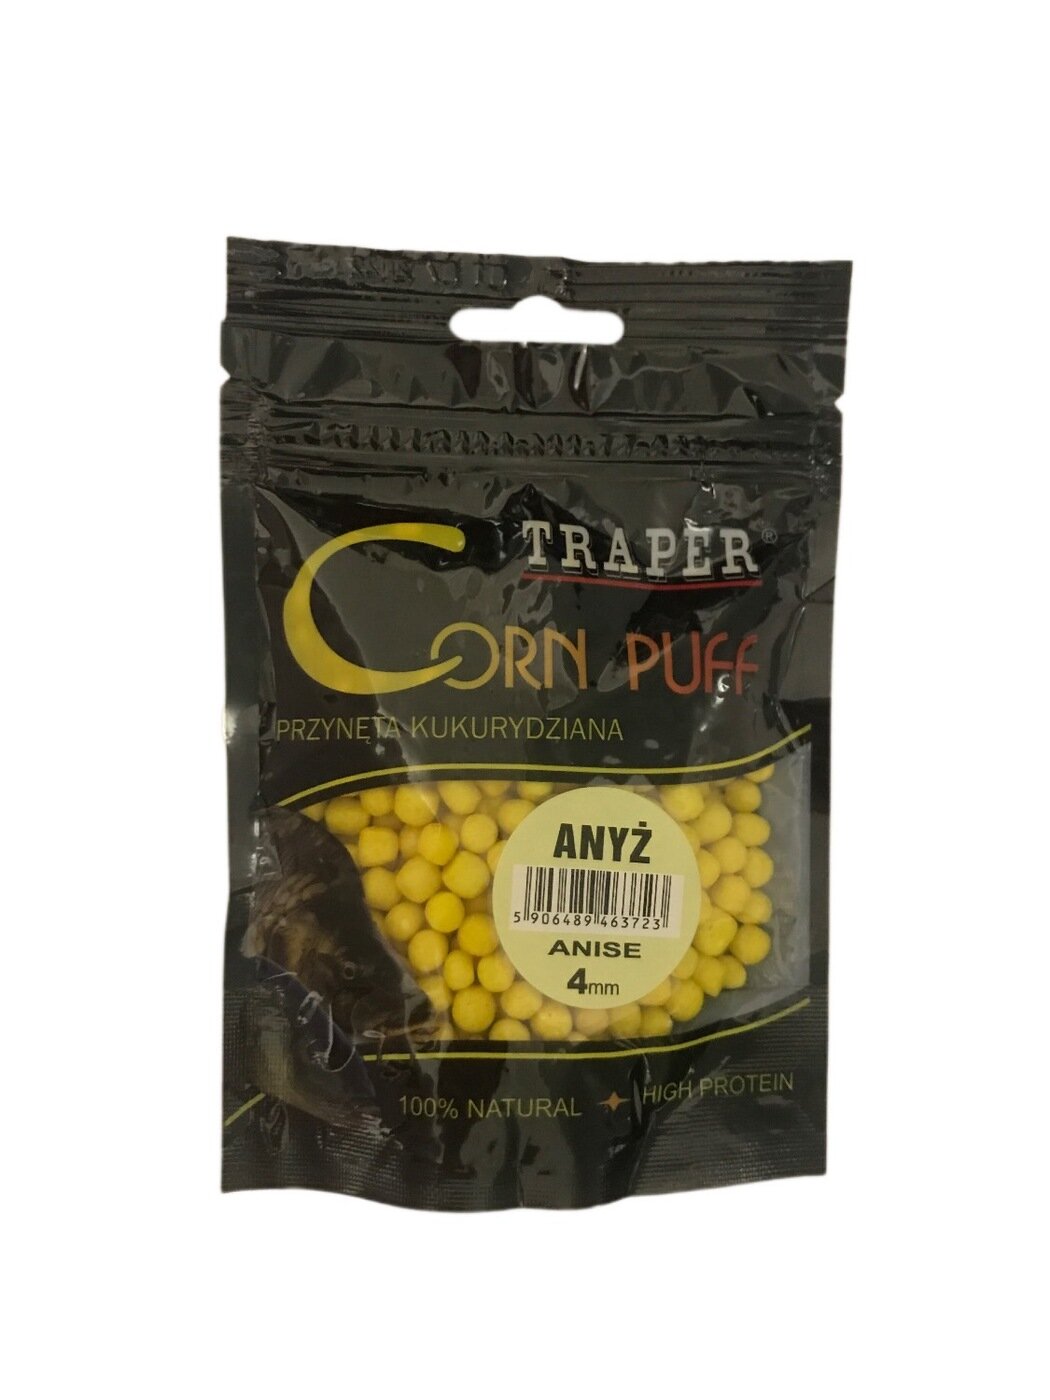 Кукуруза воздушная Traper Corn Puff Anyż (Анис) 4 mm x 20 g